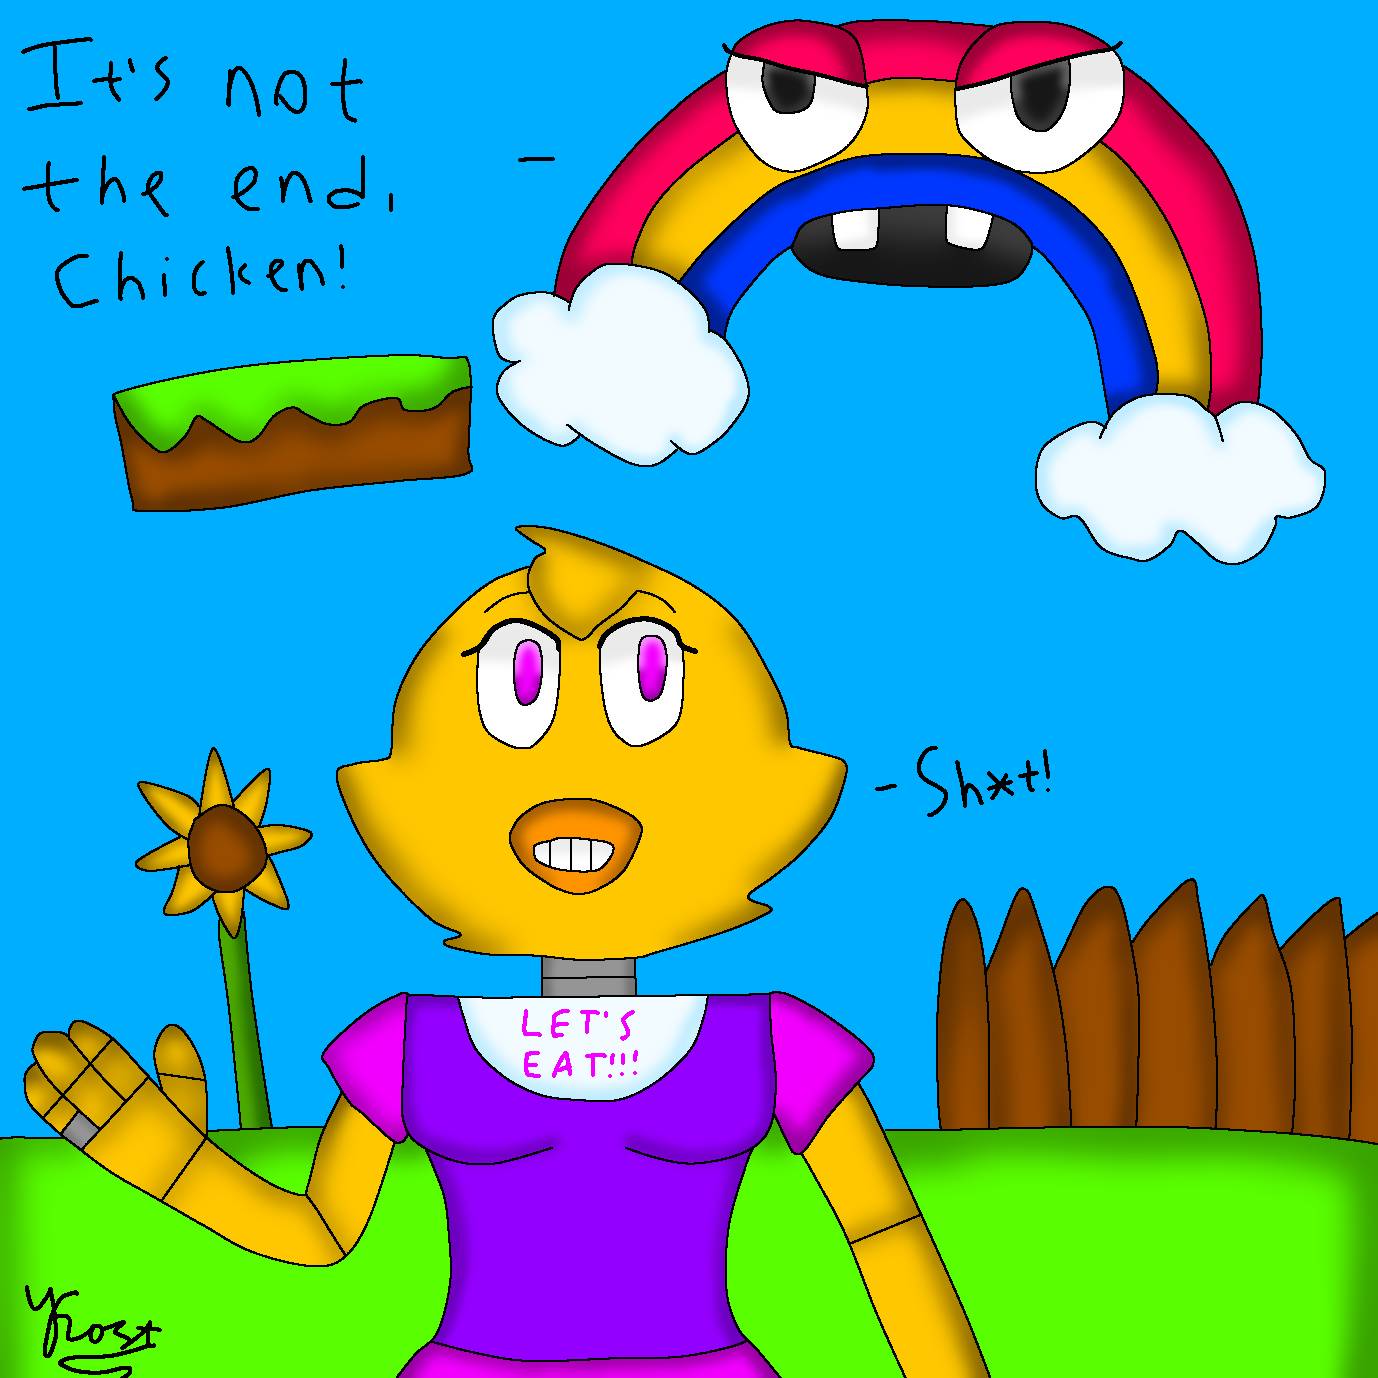 Chica the Chicken - FNAF World